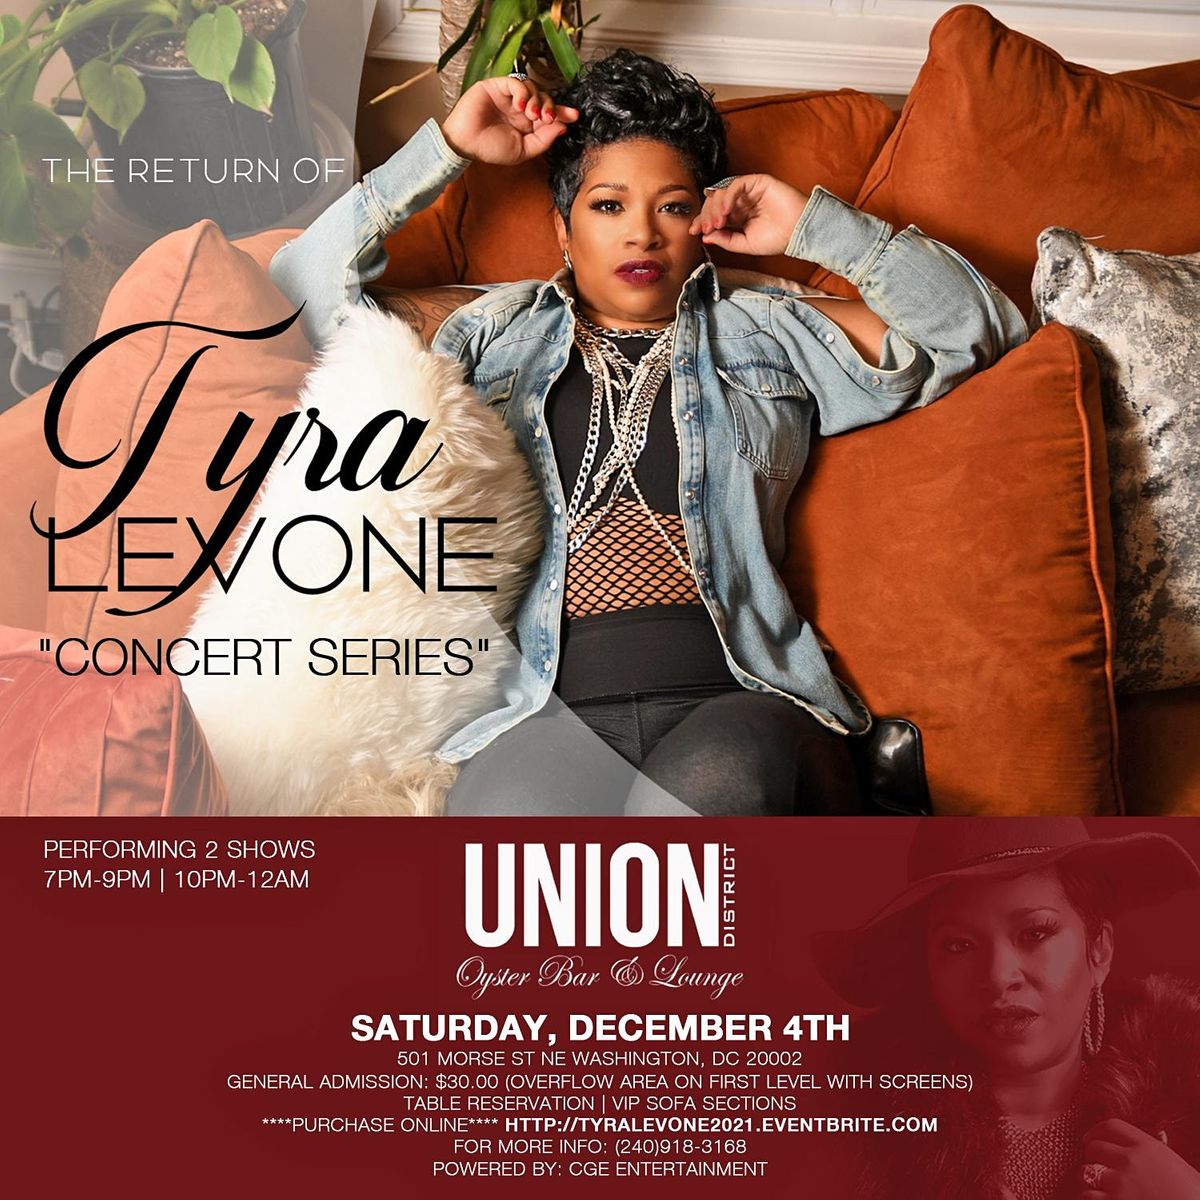 The Return of Tyra Levone "Concert Series"